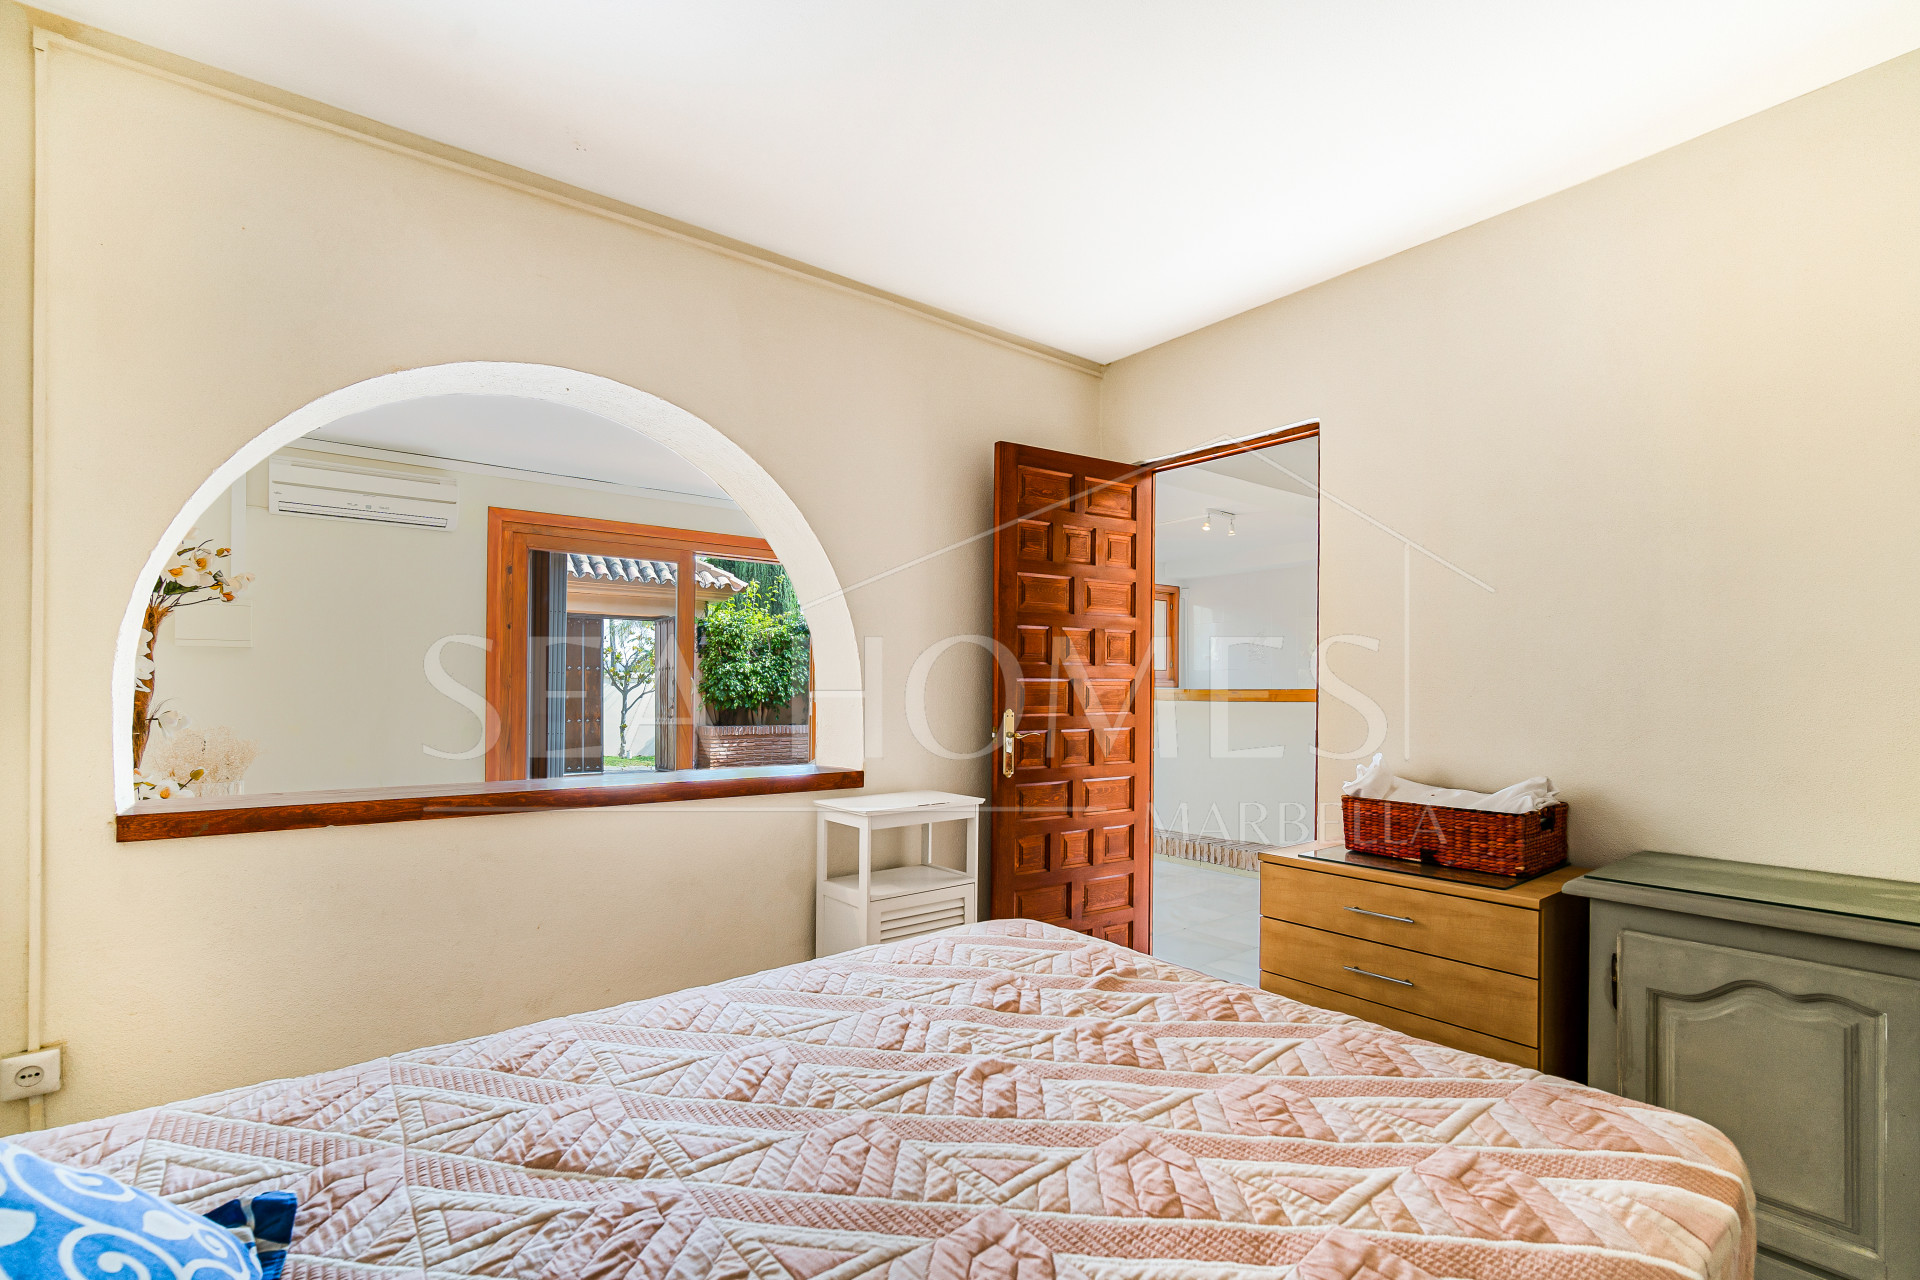 Fantastic four bedroom, east facing Villa located in Rio Real, Marbella - a great reform project